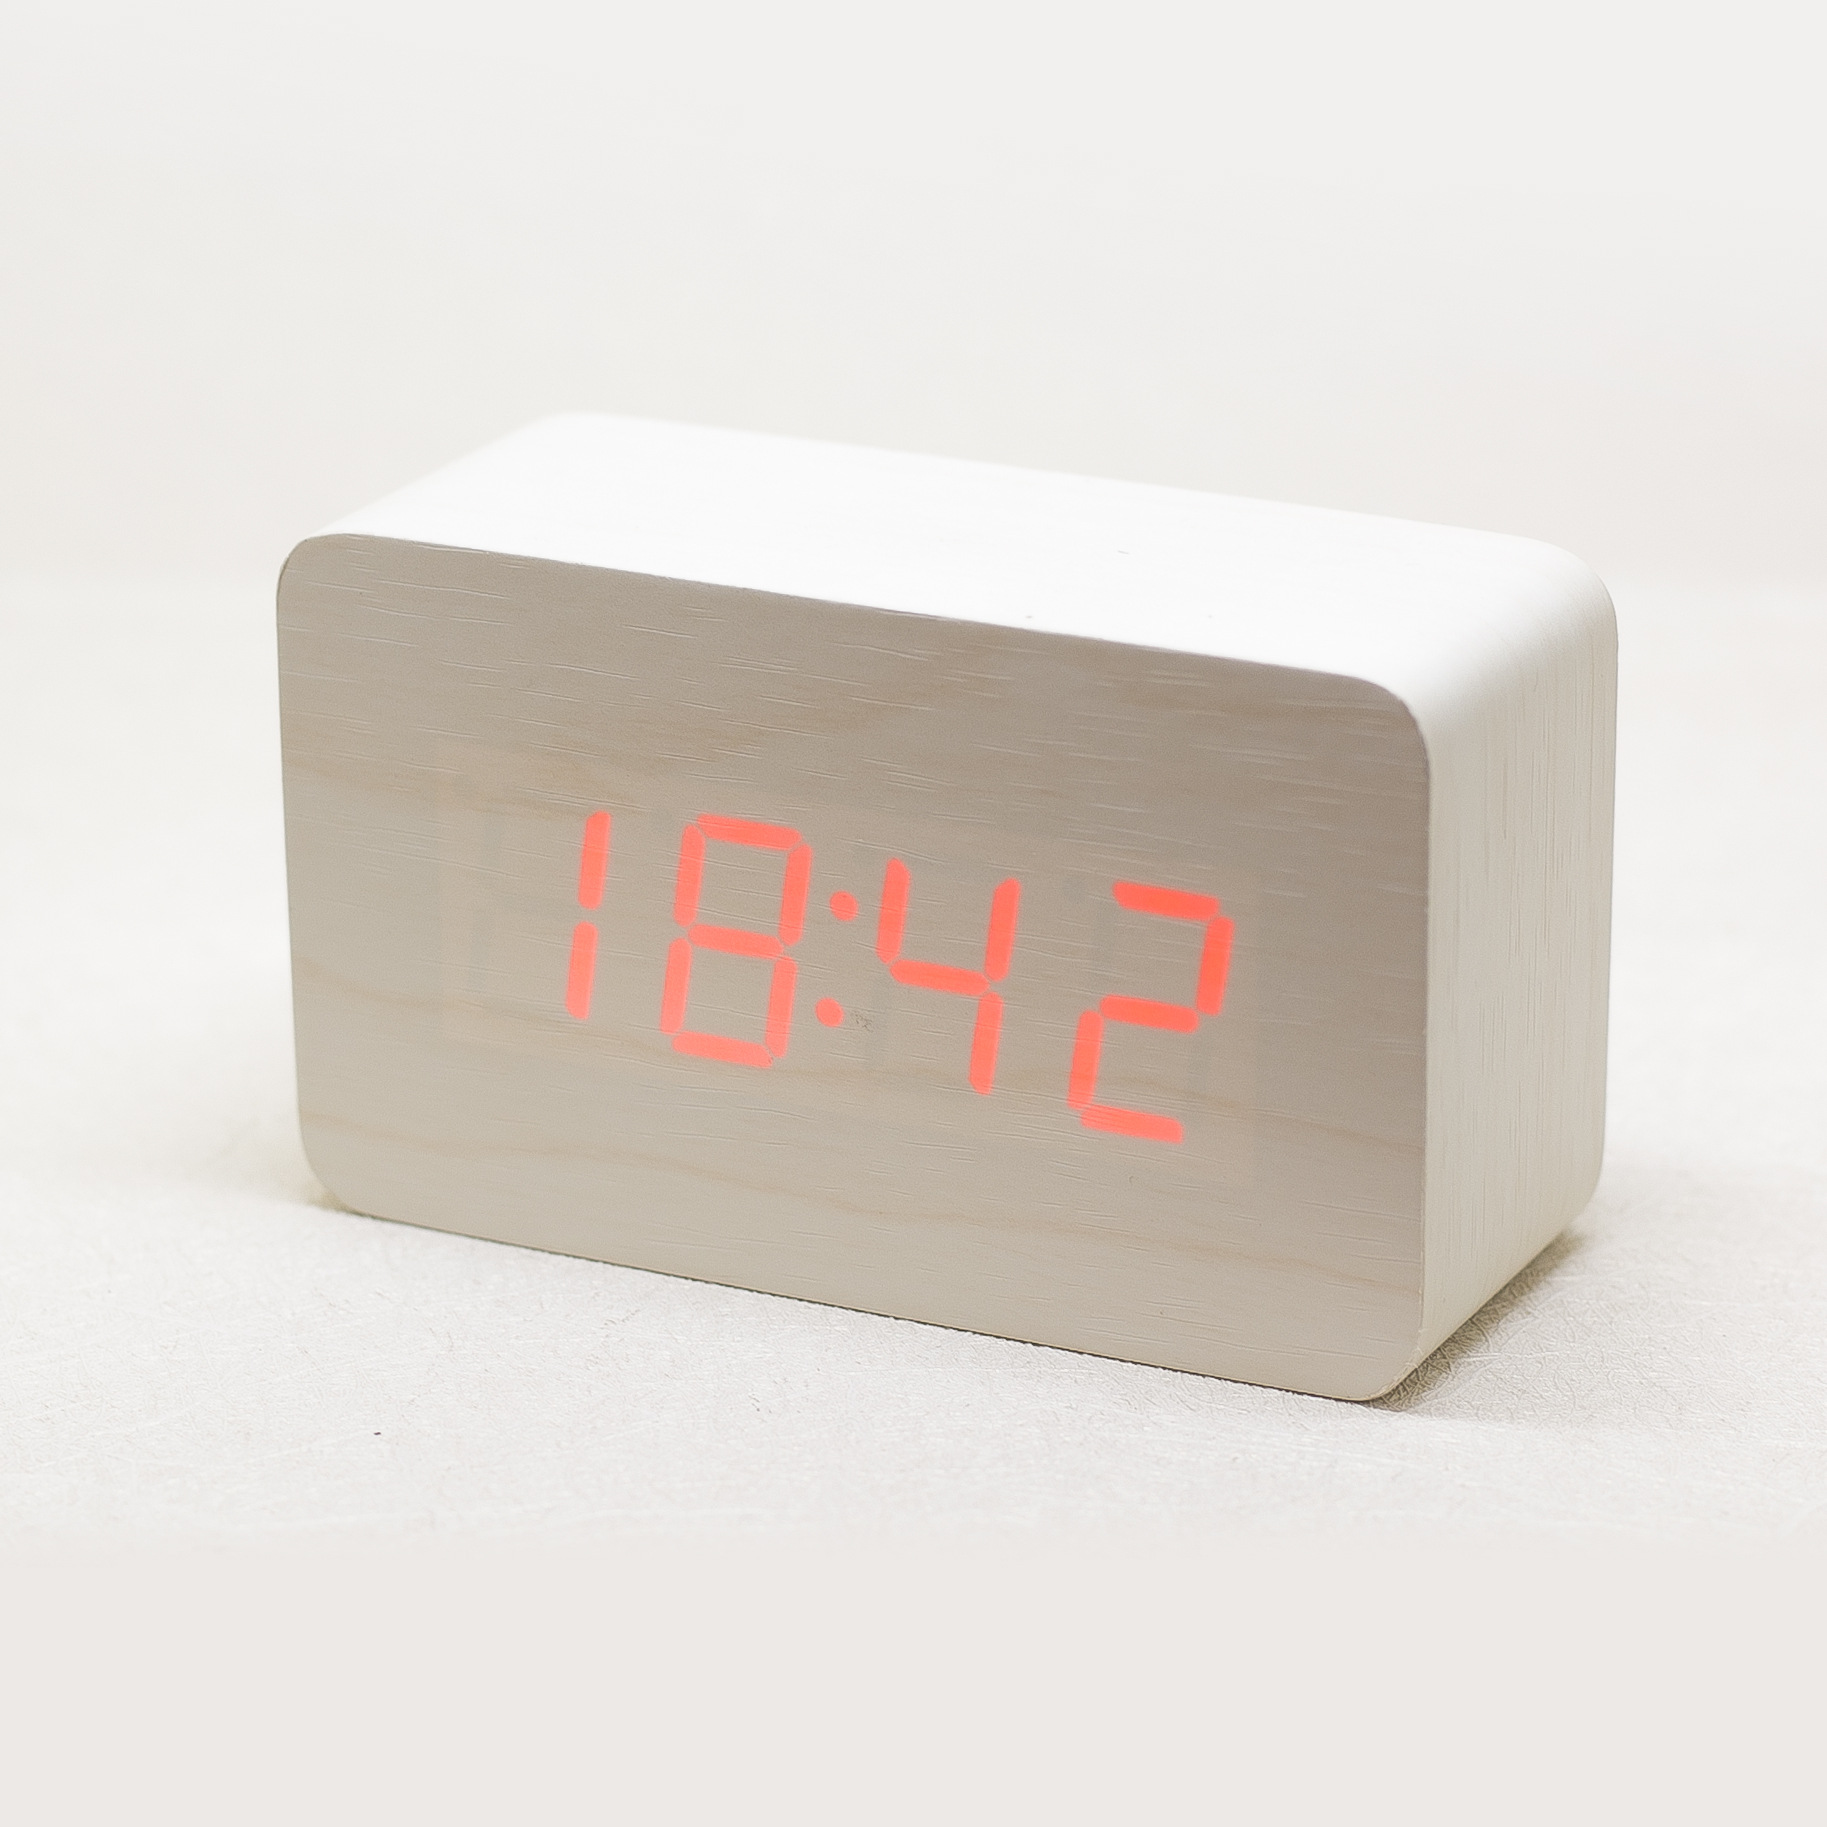 LED Digital Electronic Alarm Clock